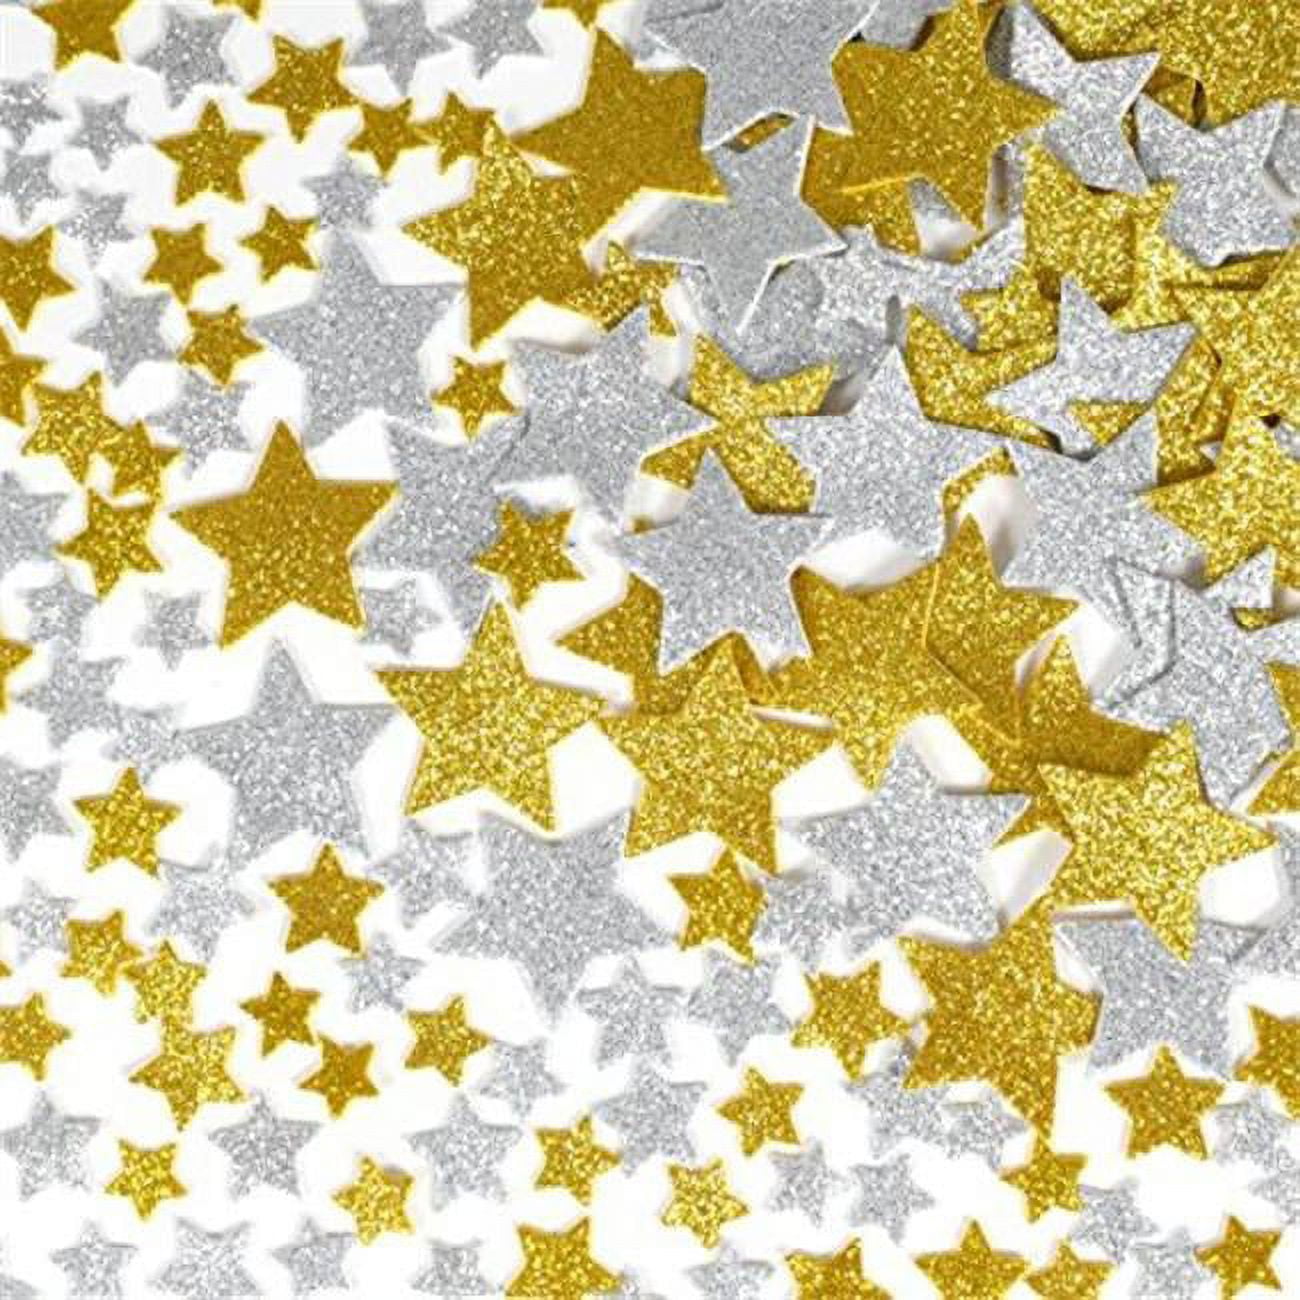 1Bag Colorful Self Adhesive Stars Shaped Foam Glitter Sticker Craft 